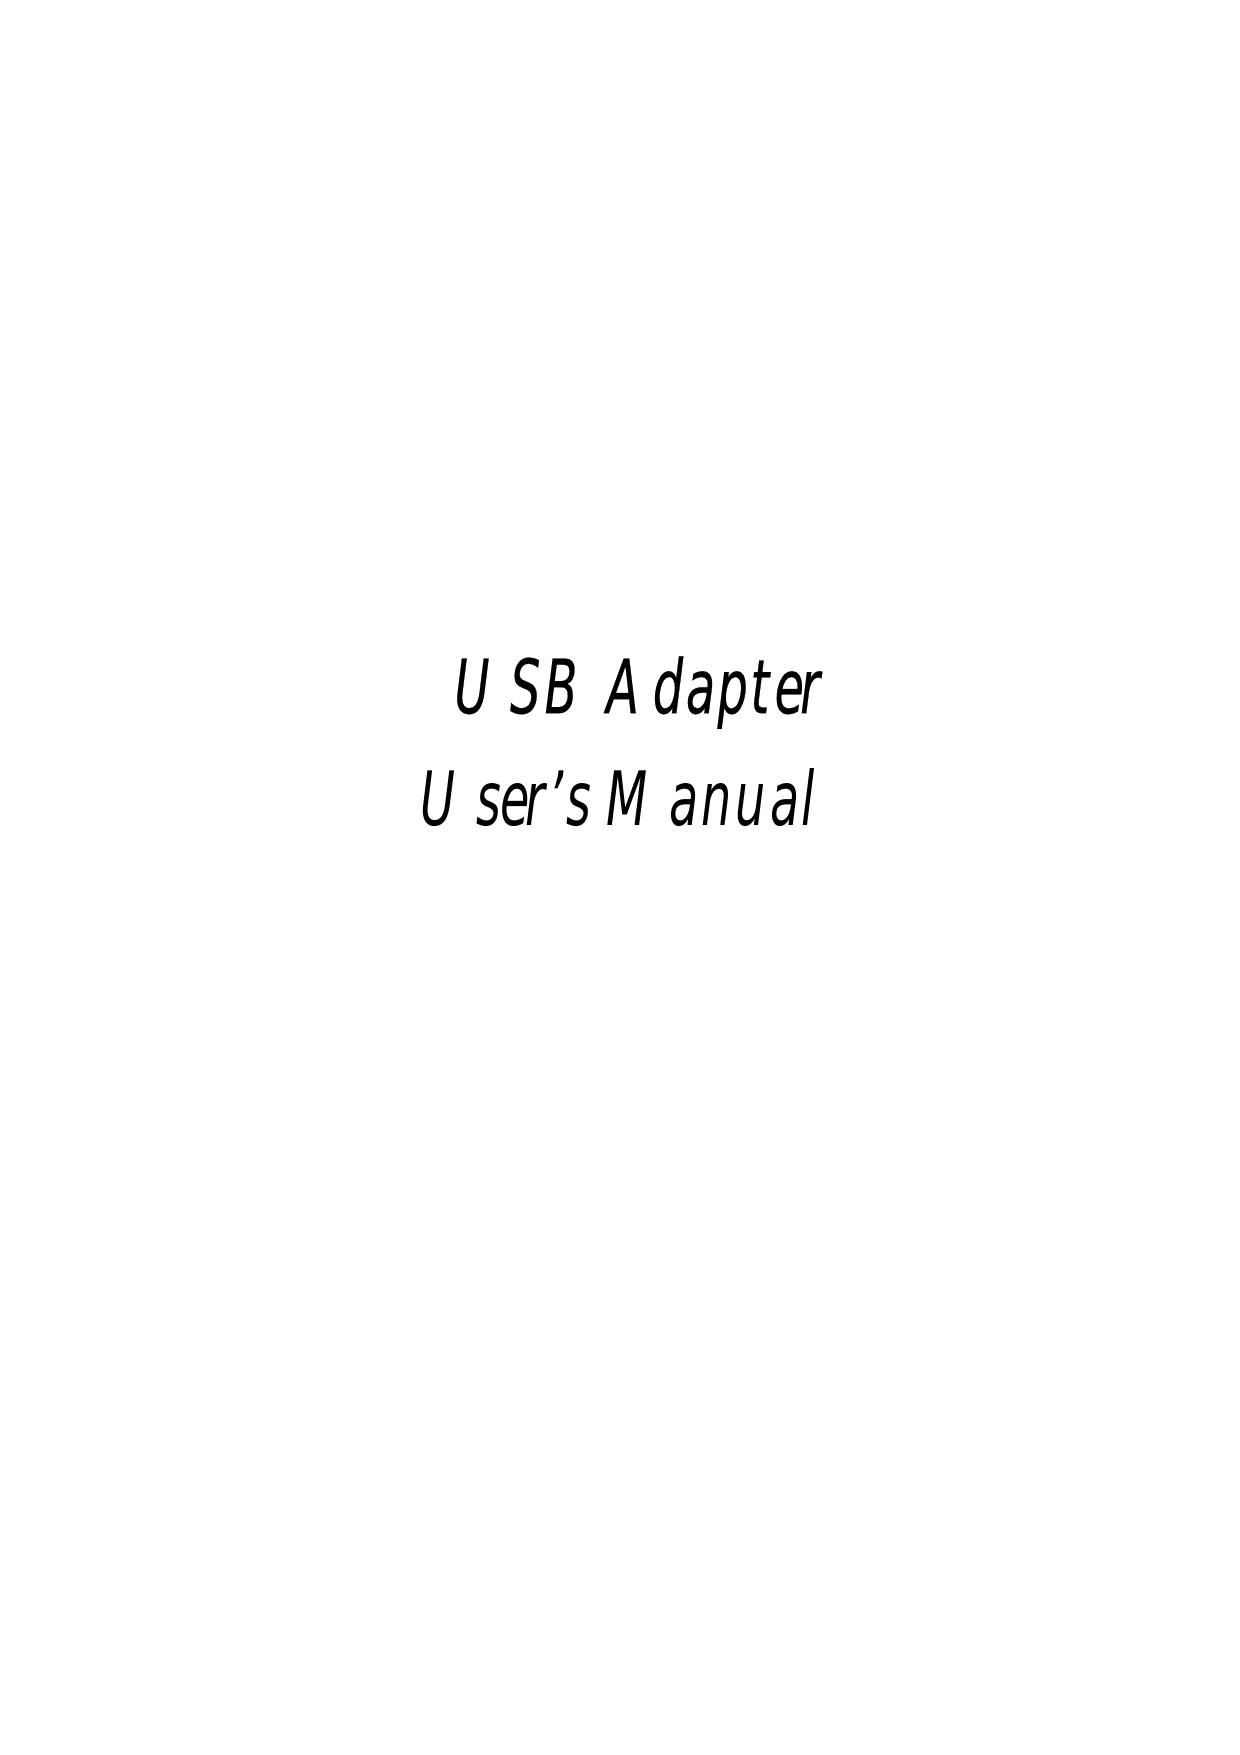           USB Adapter User’s Manual    